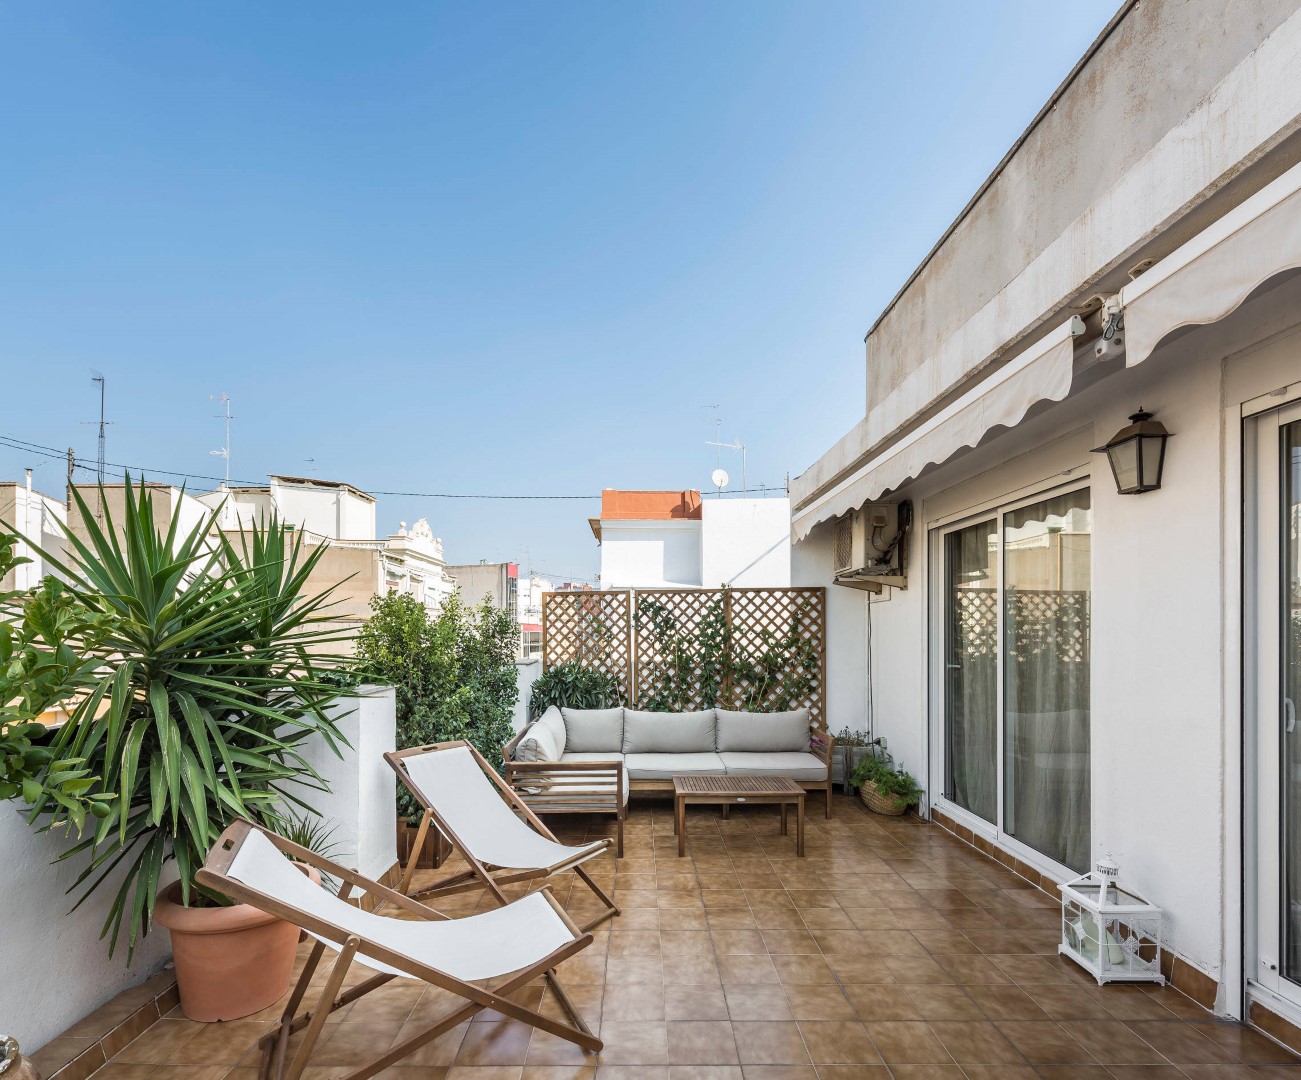 15 Beautiful Mediterranean Balcony Designs Every Home Needs